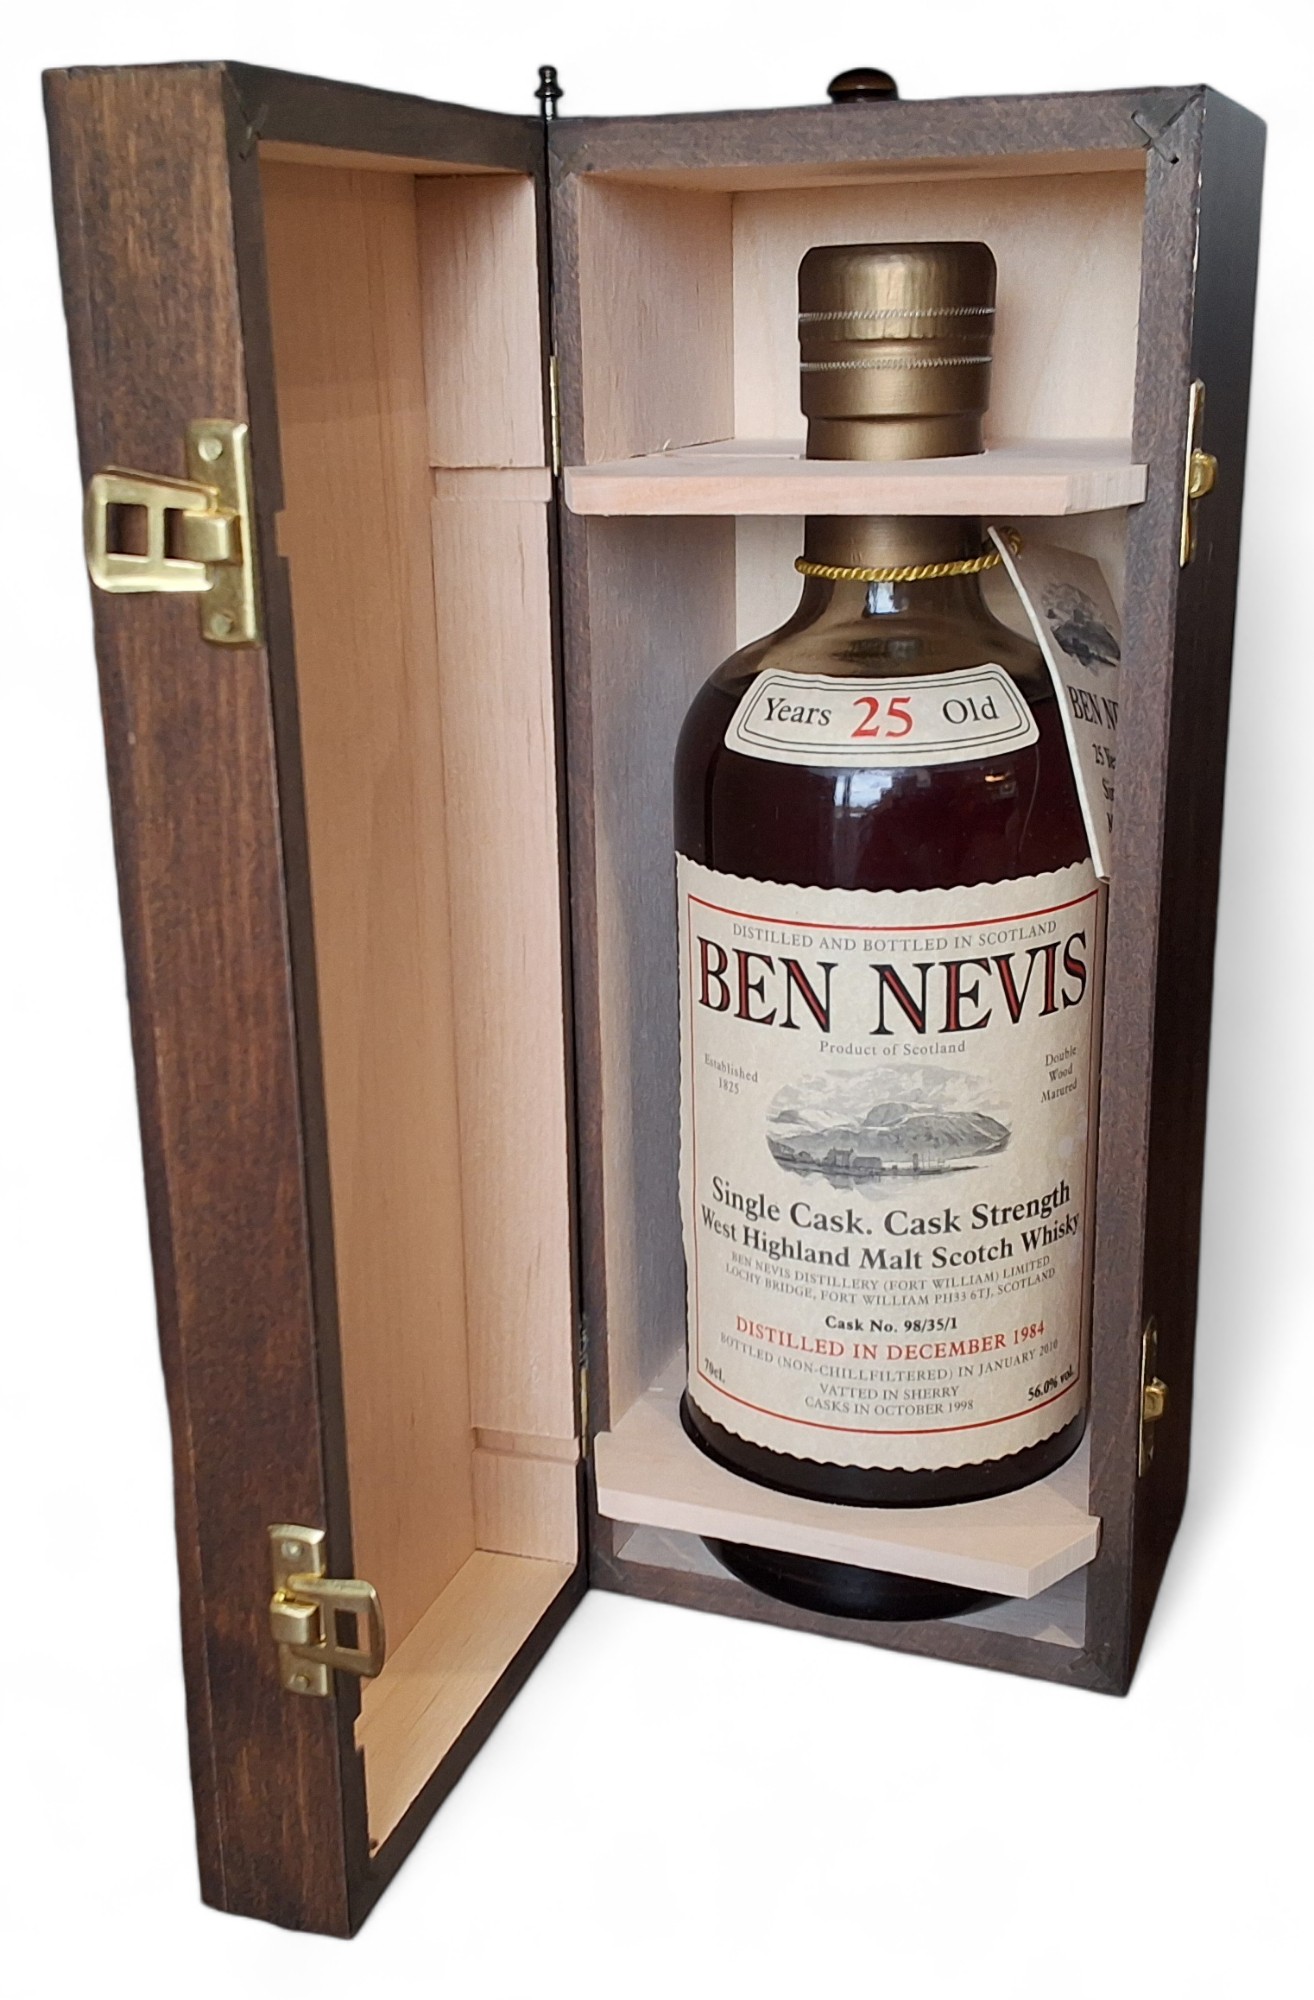 Ben Nevis Single Highland Malt Scotch Whisky, cask no 98/35/1, distilled December 1984, vatted in